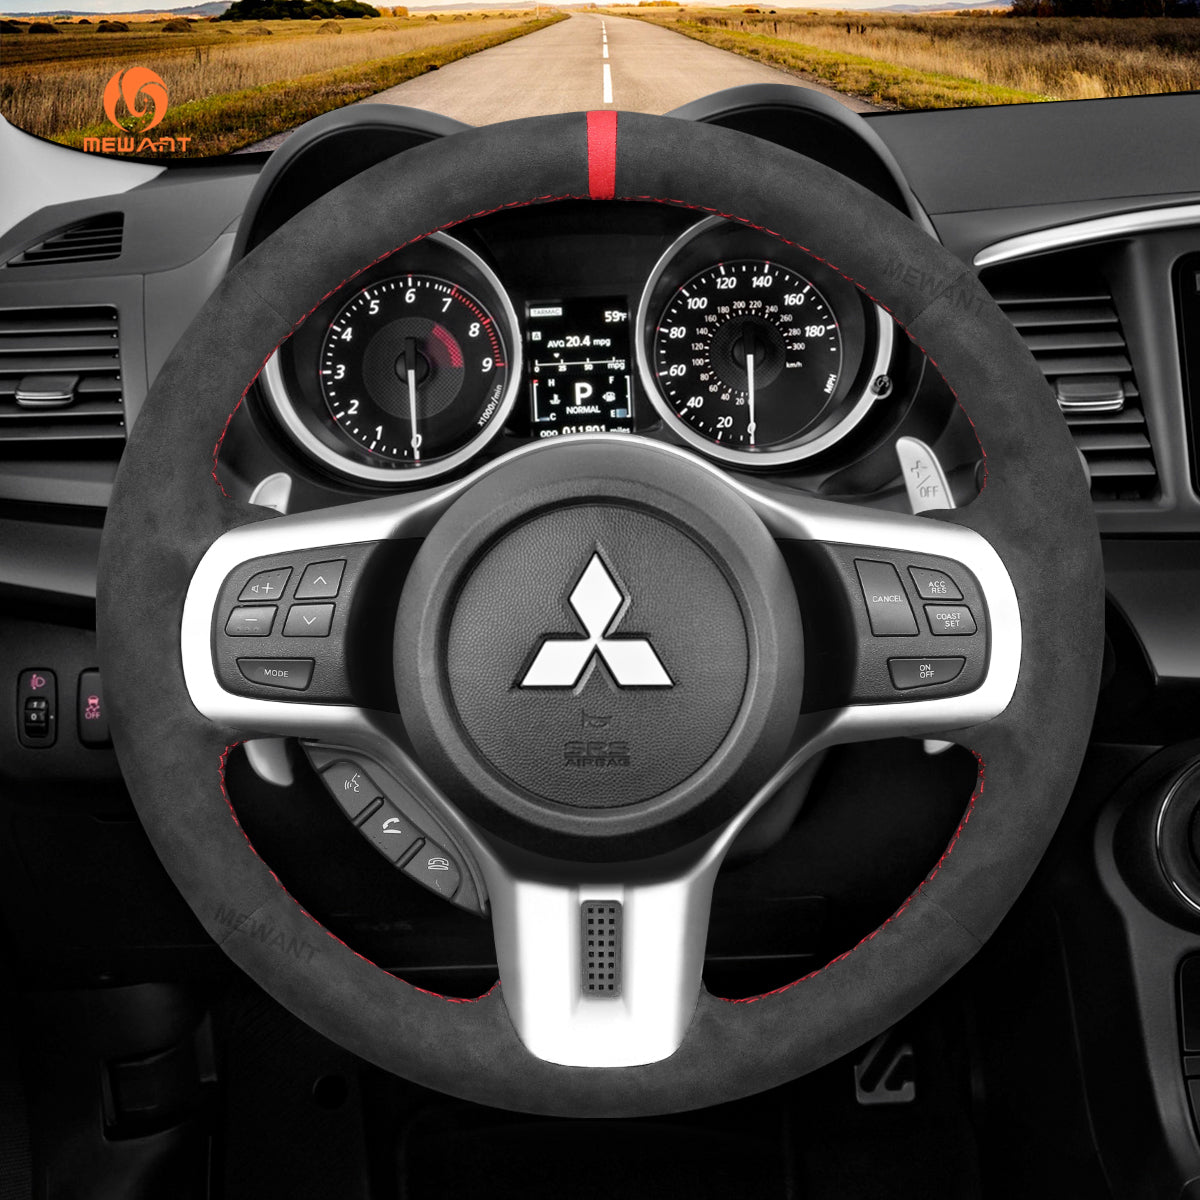  MEWANT DIY Carbon Fiber Alcantara Car Steering Wheel Cover for Mitsubishi Lancer Evolution EVO X 10 2008-2015